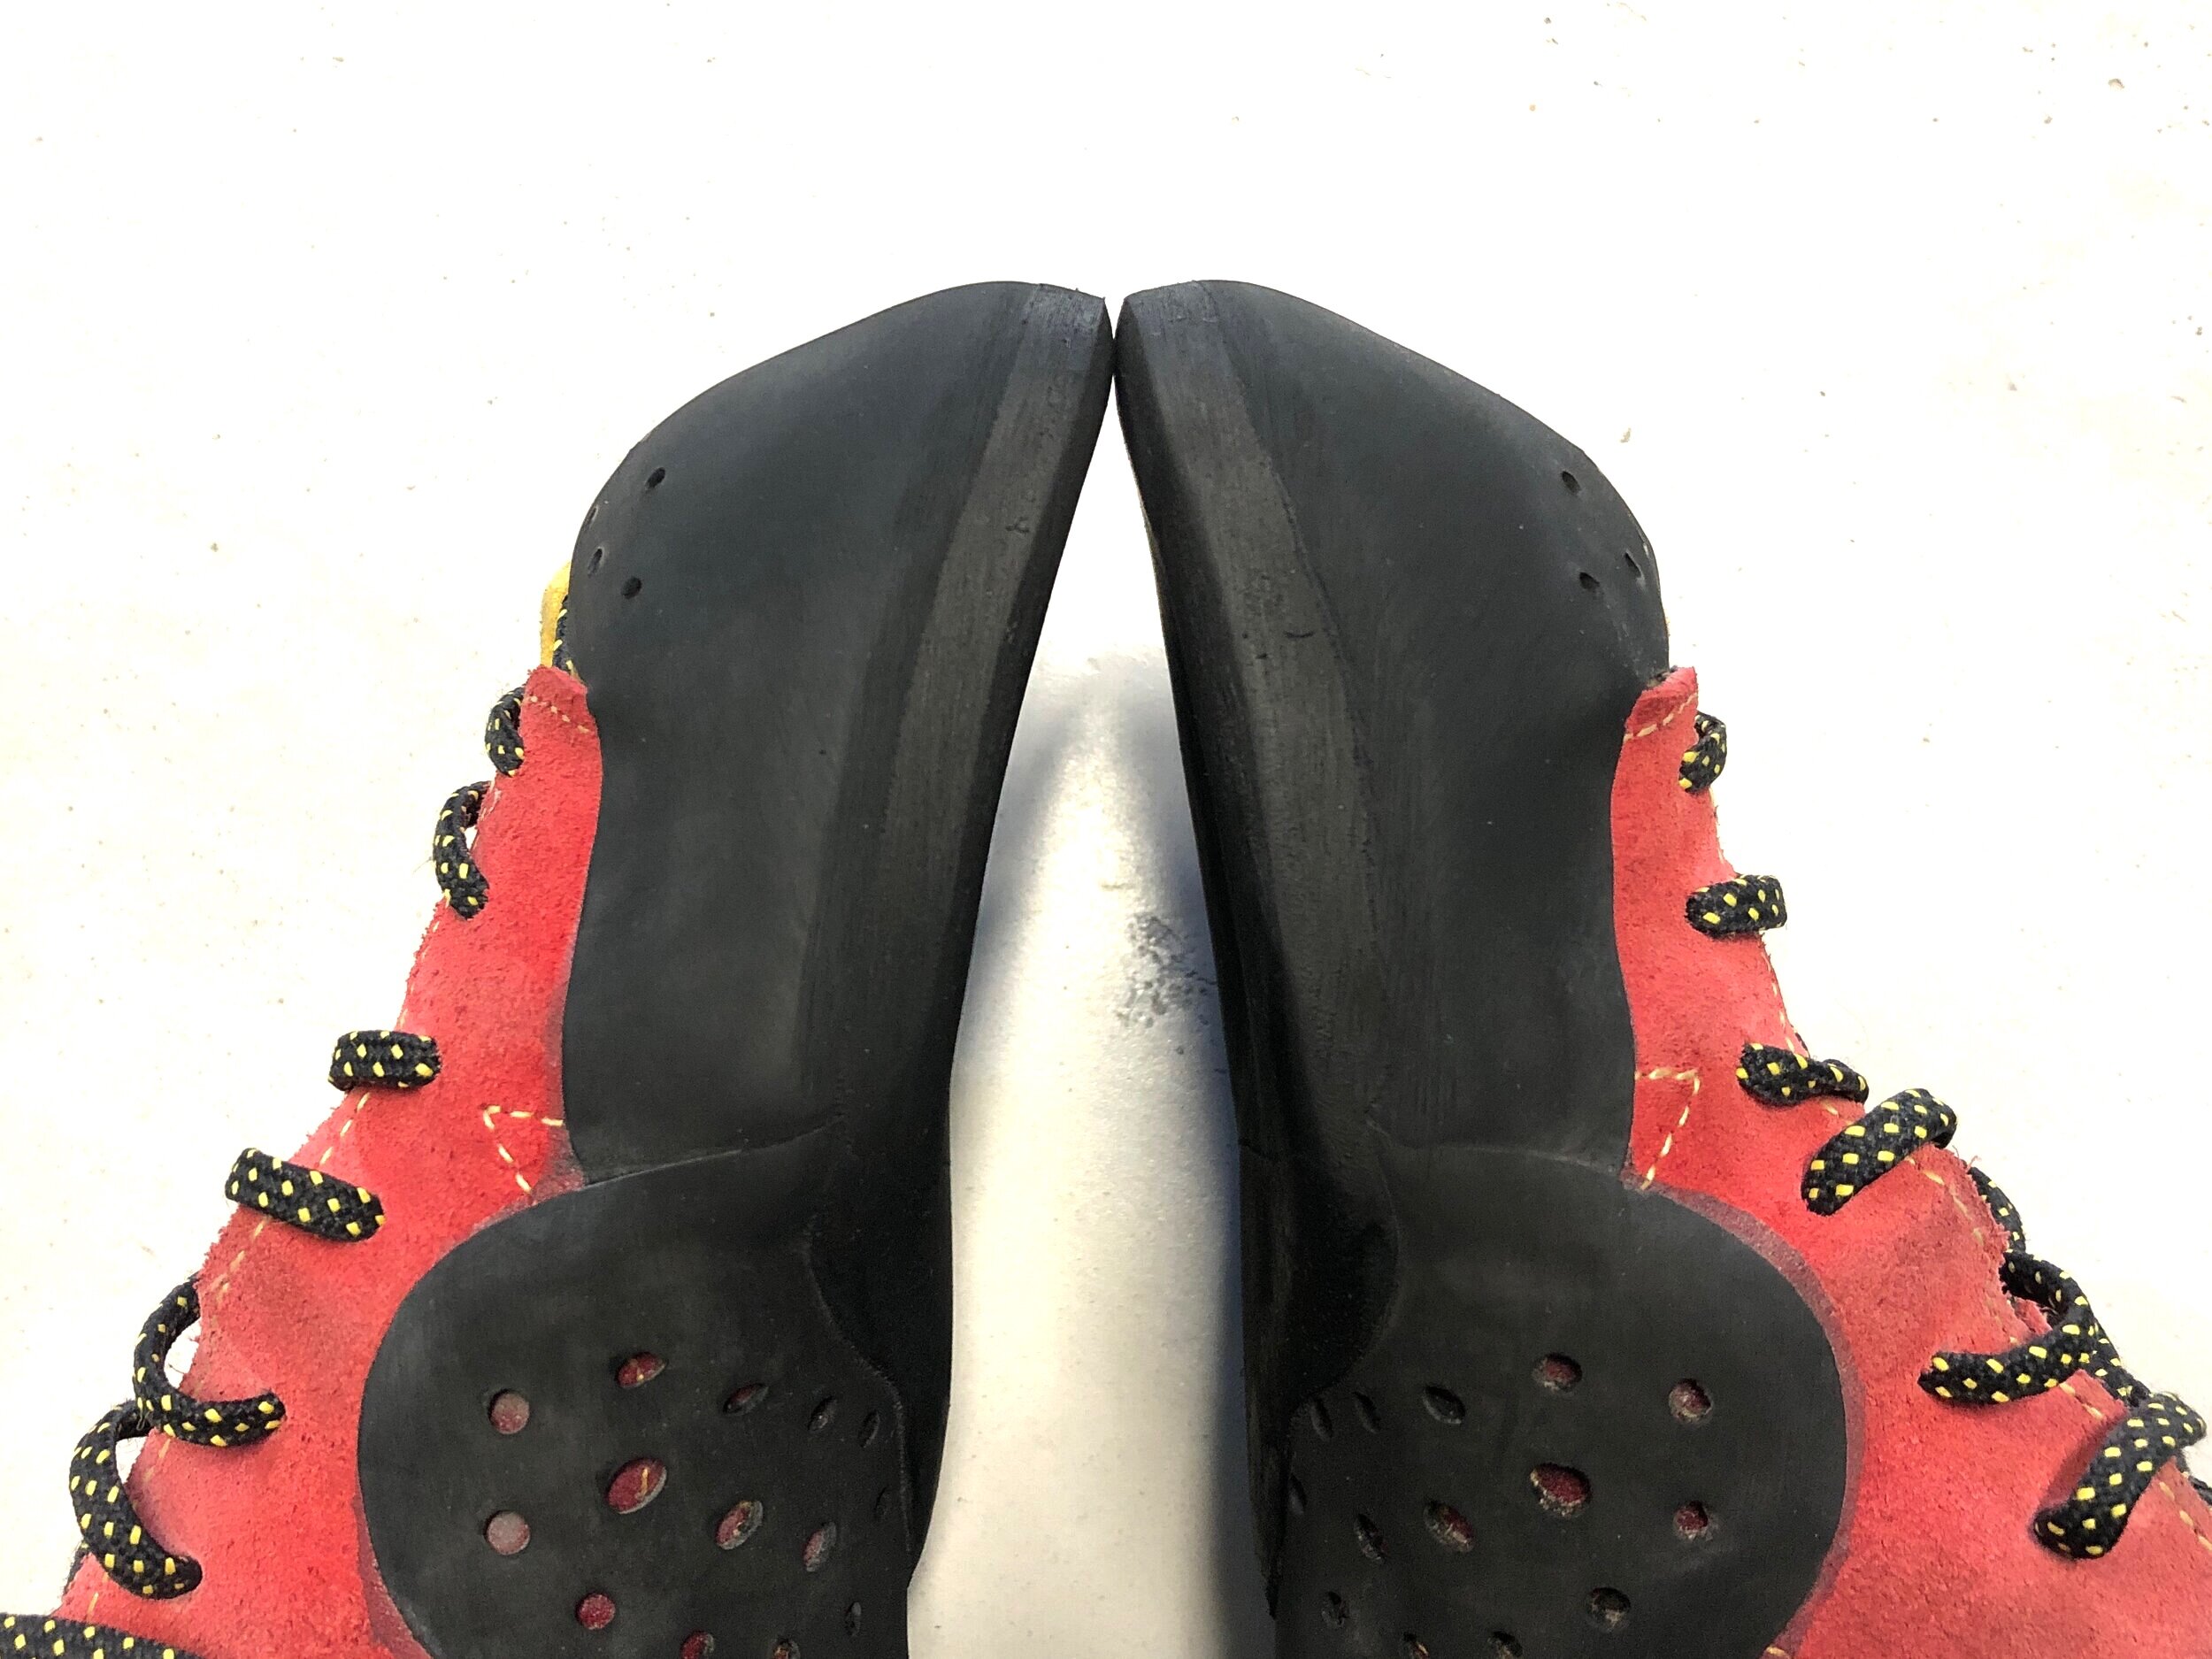 Vibram XS Grip 2 Climbing Shoe Resole Kit half sole 